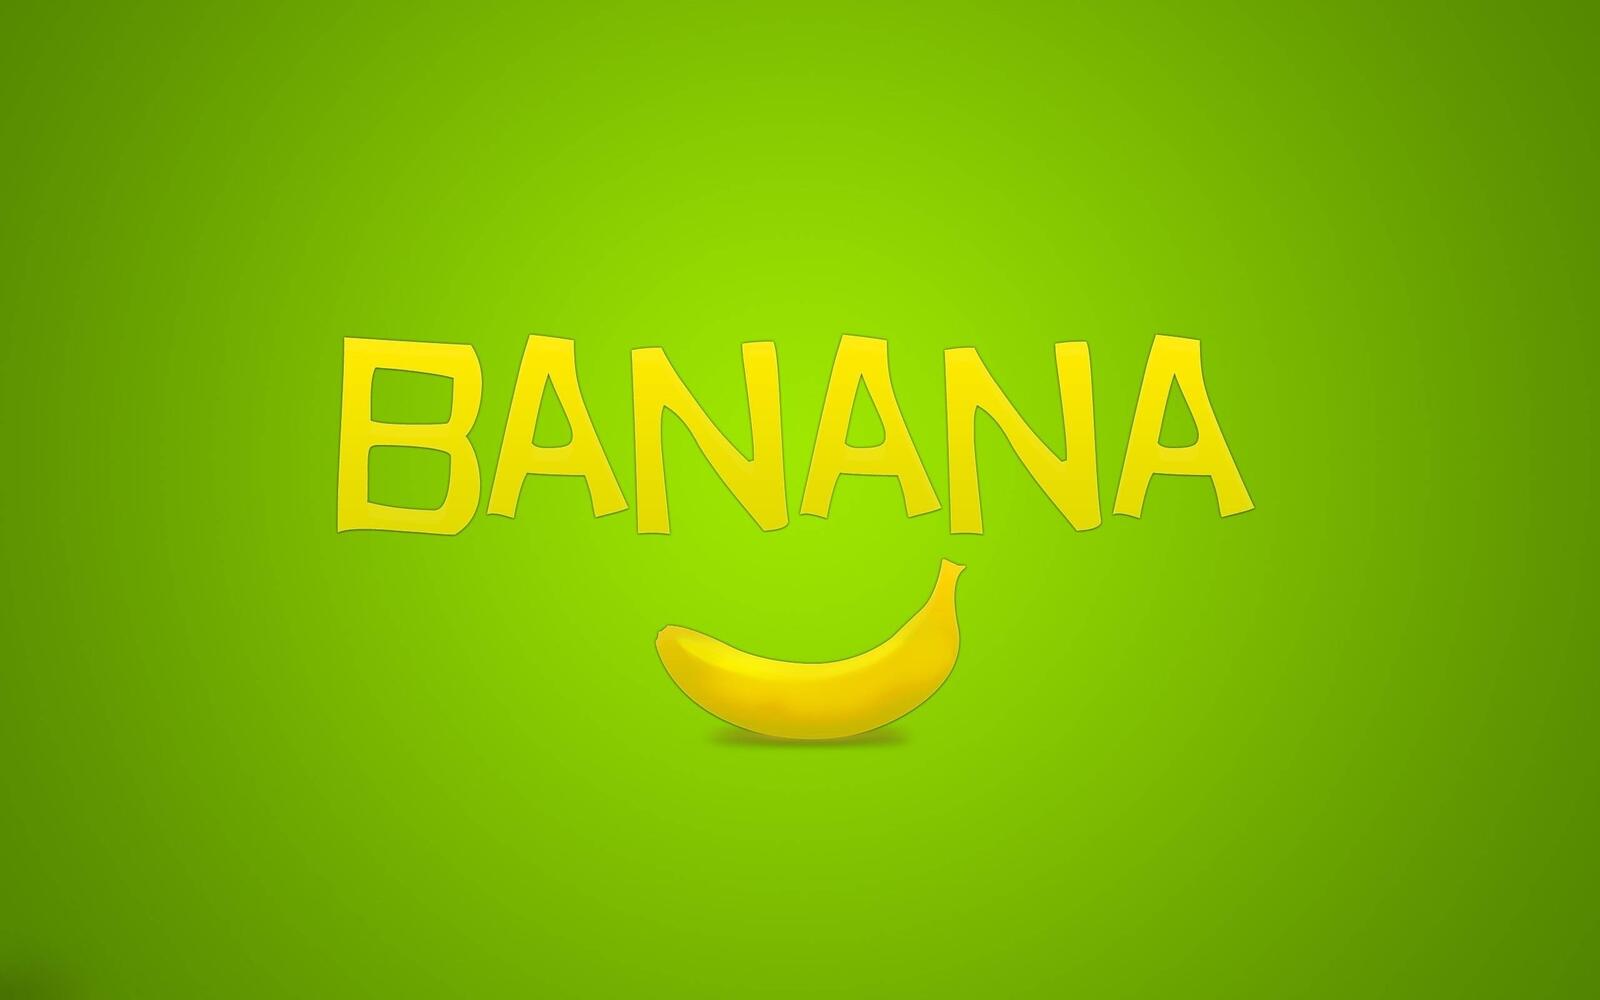 Wallpapers drawing banana inscription on the desktop